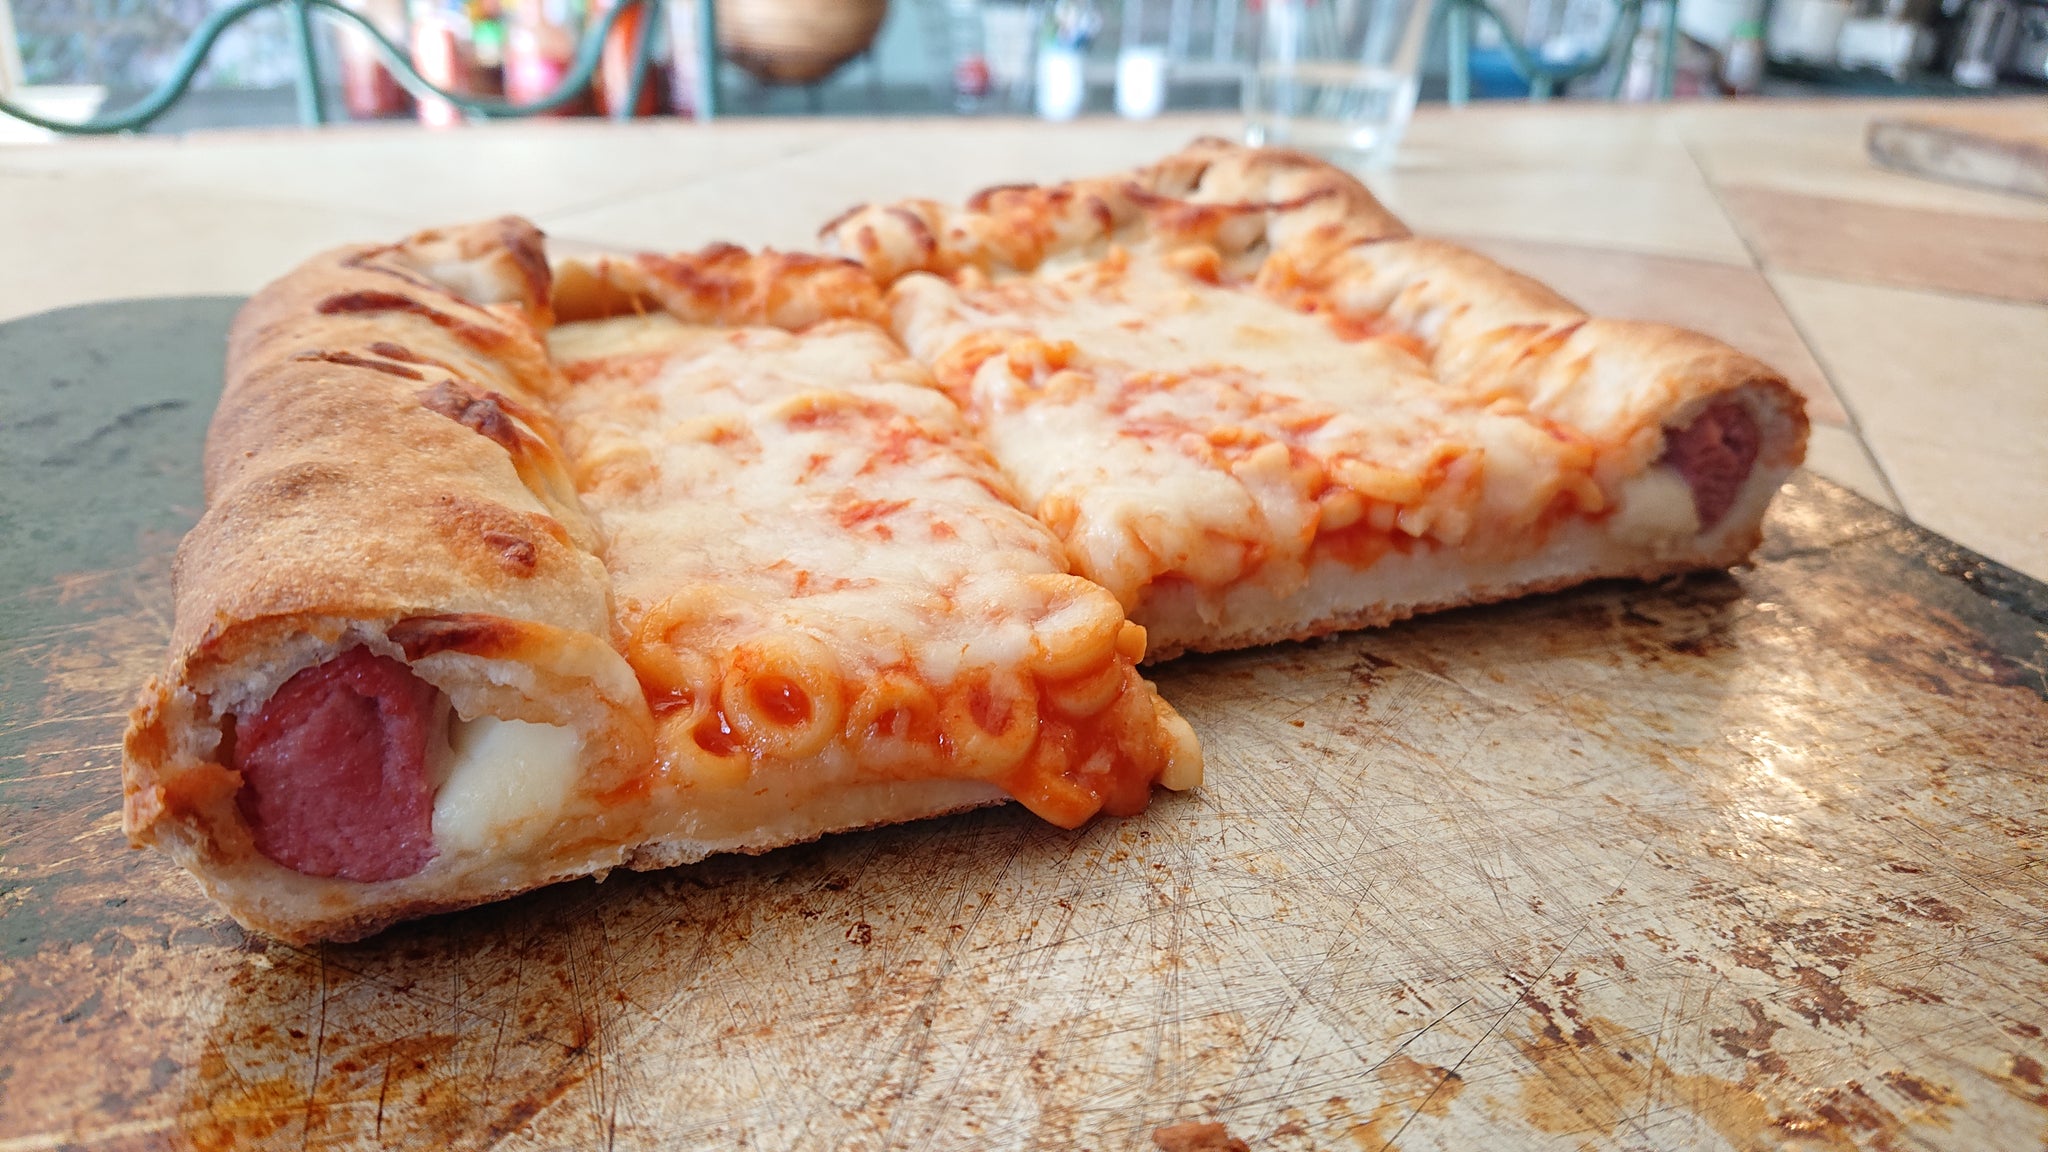 Spaghetti-Os Pizza with Cheese & Hotdog Stuffed Crust